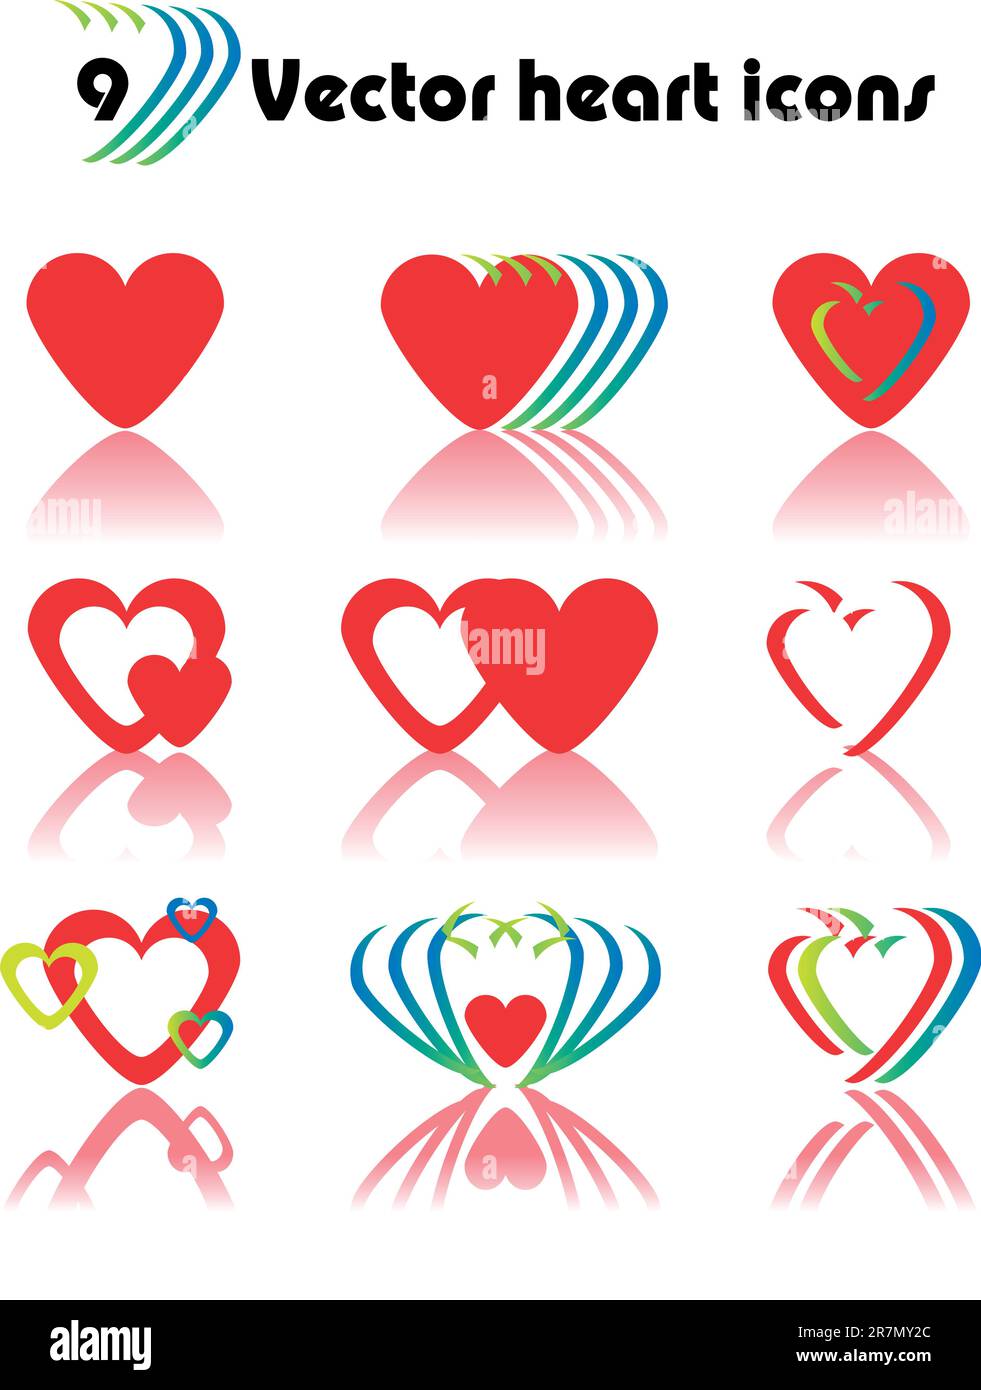 9 Vector heart icons set Stock Vector